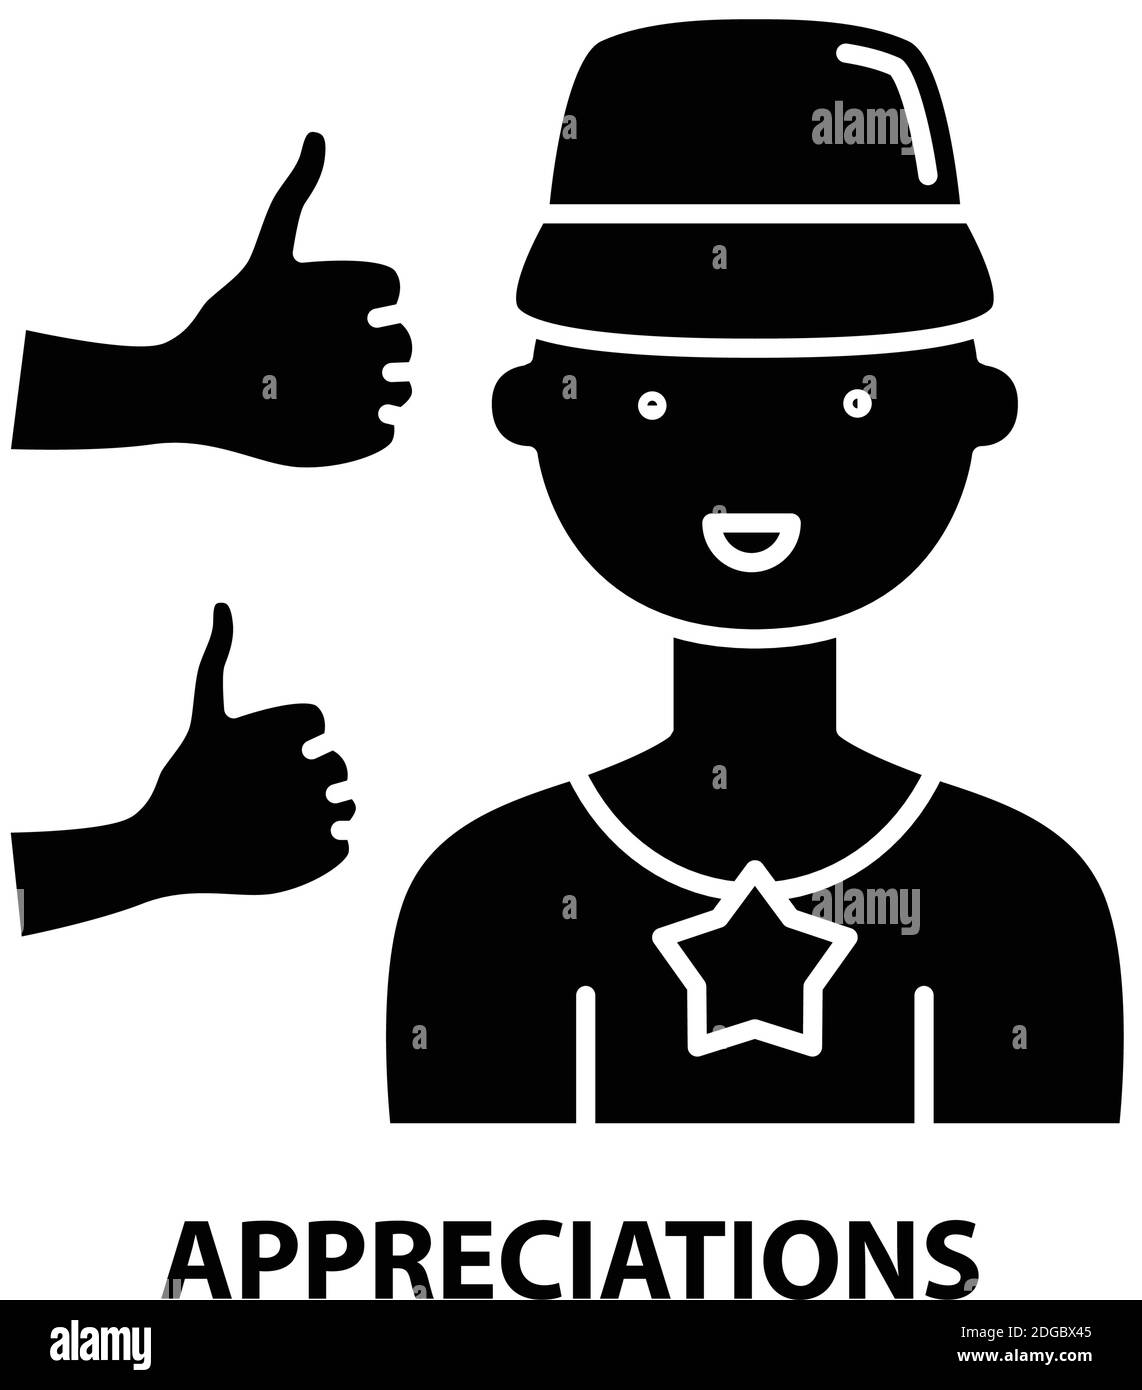 appreciations icon, black vector sign with editable strokes, concept illustration Stock Vector